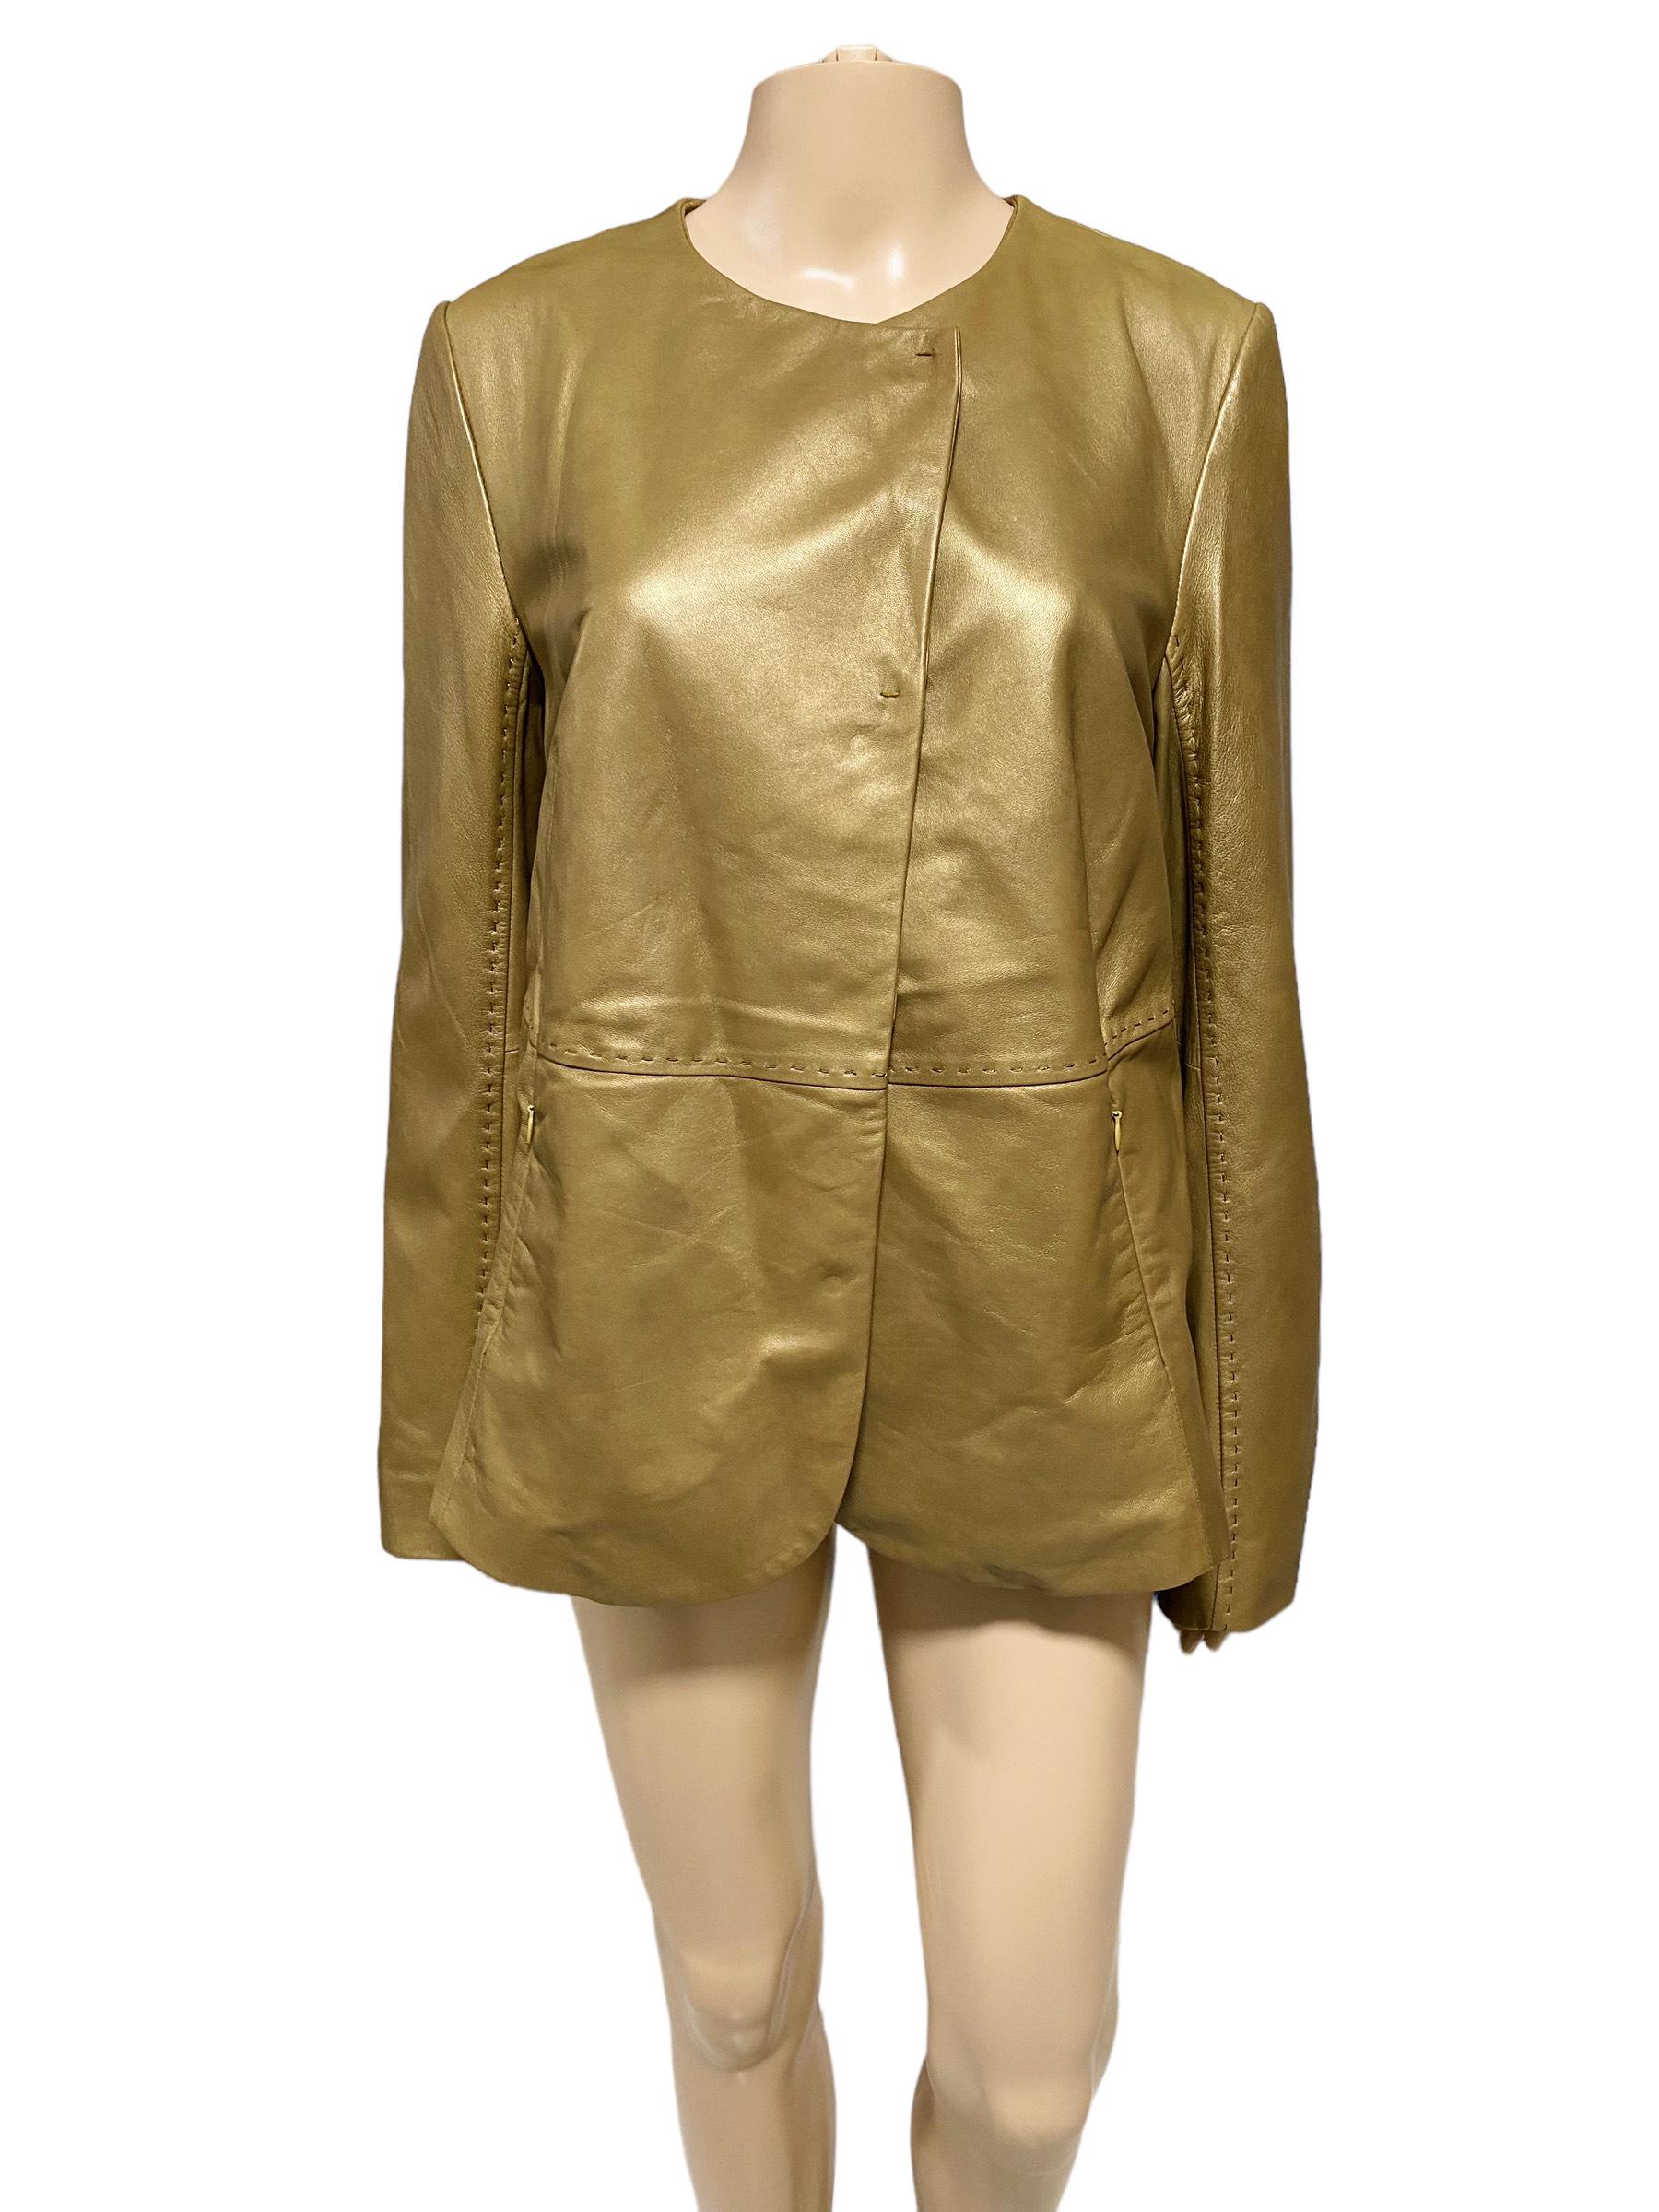 Brown Marina Rinaldi x Max Mara Genuine Leather Jacket - Limited Edition For Sale